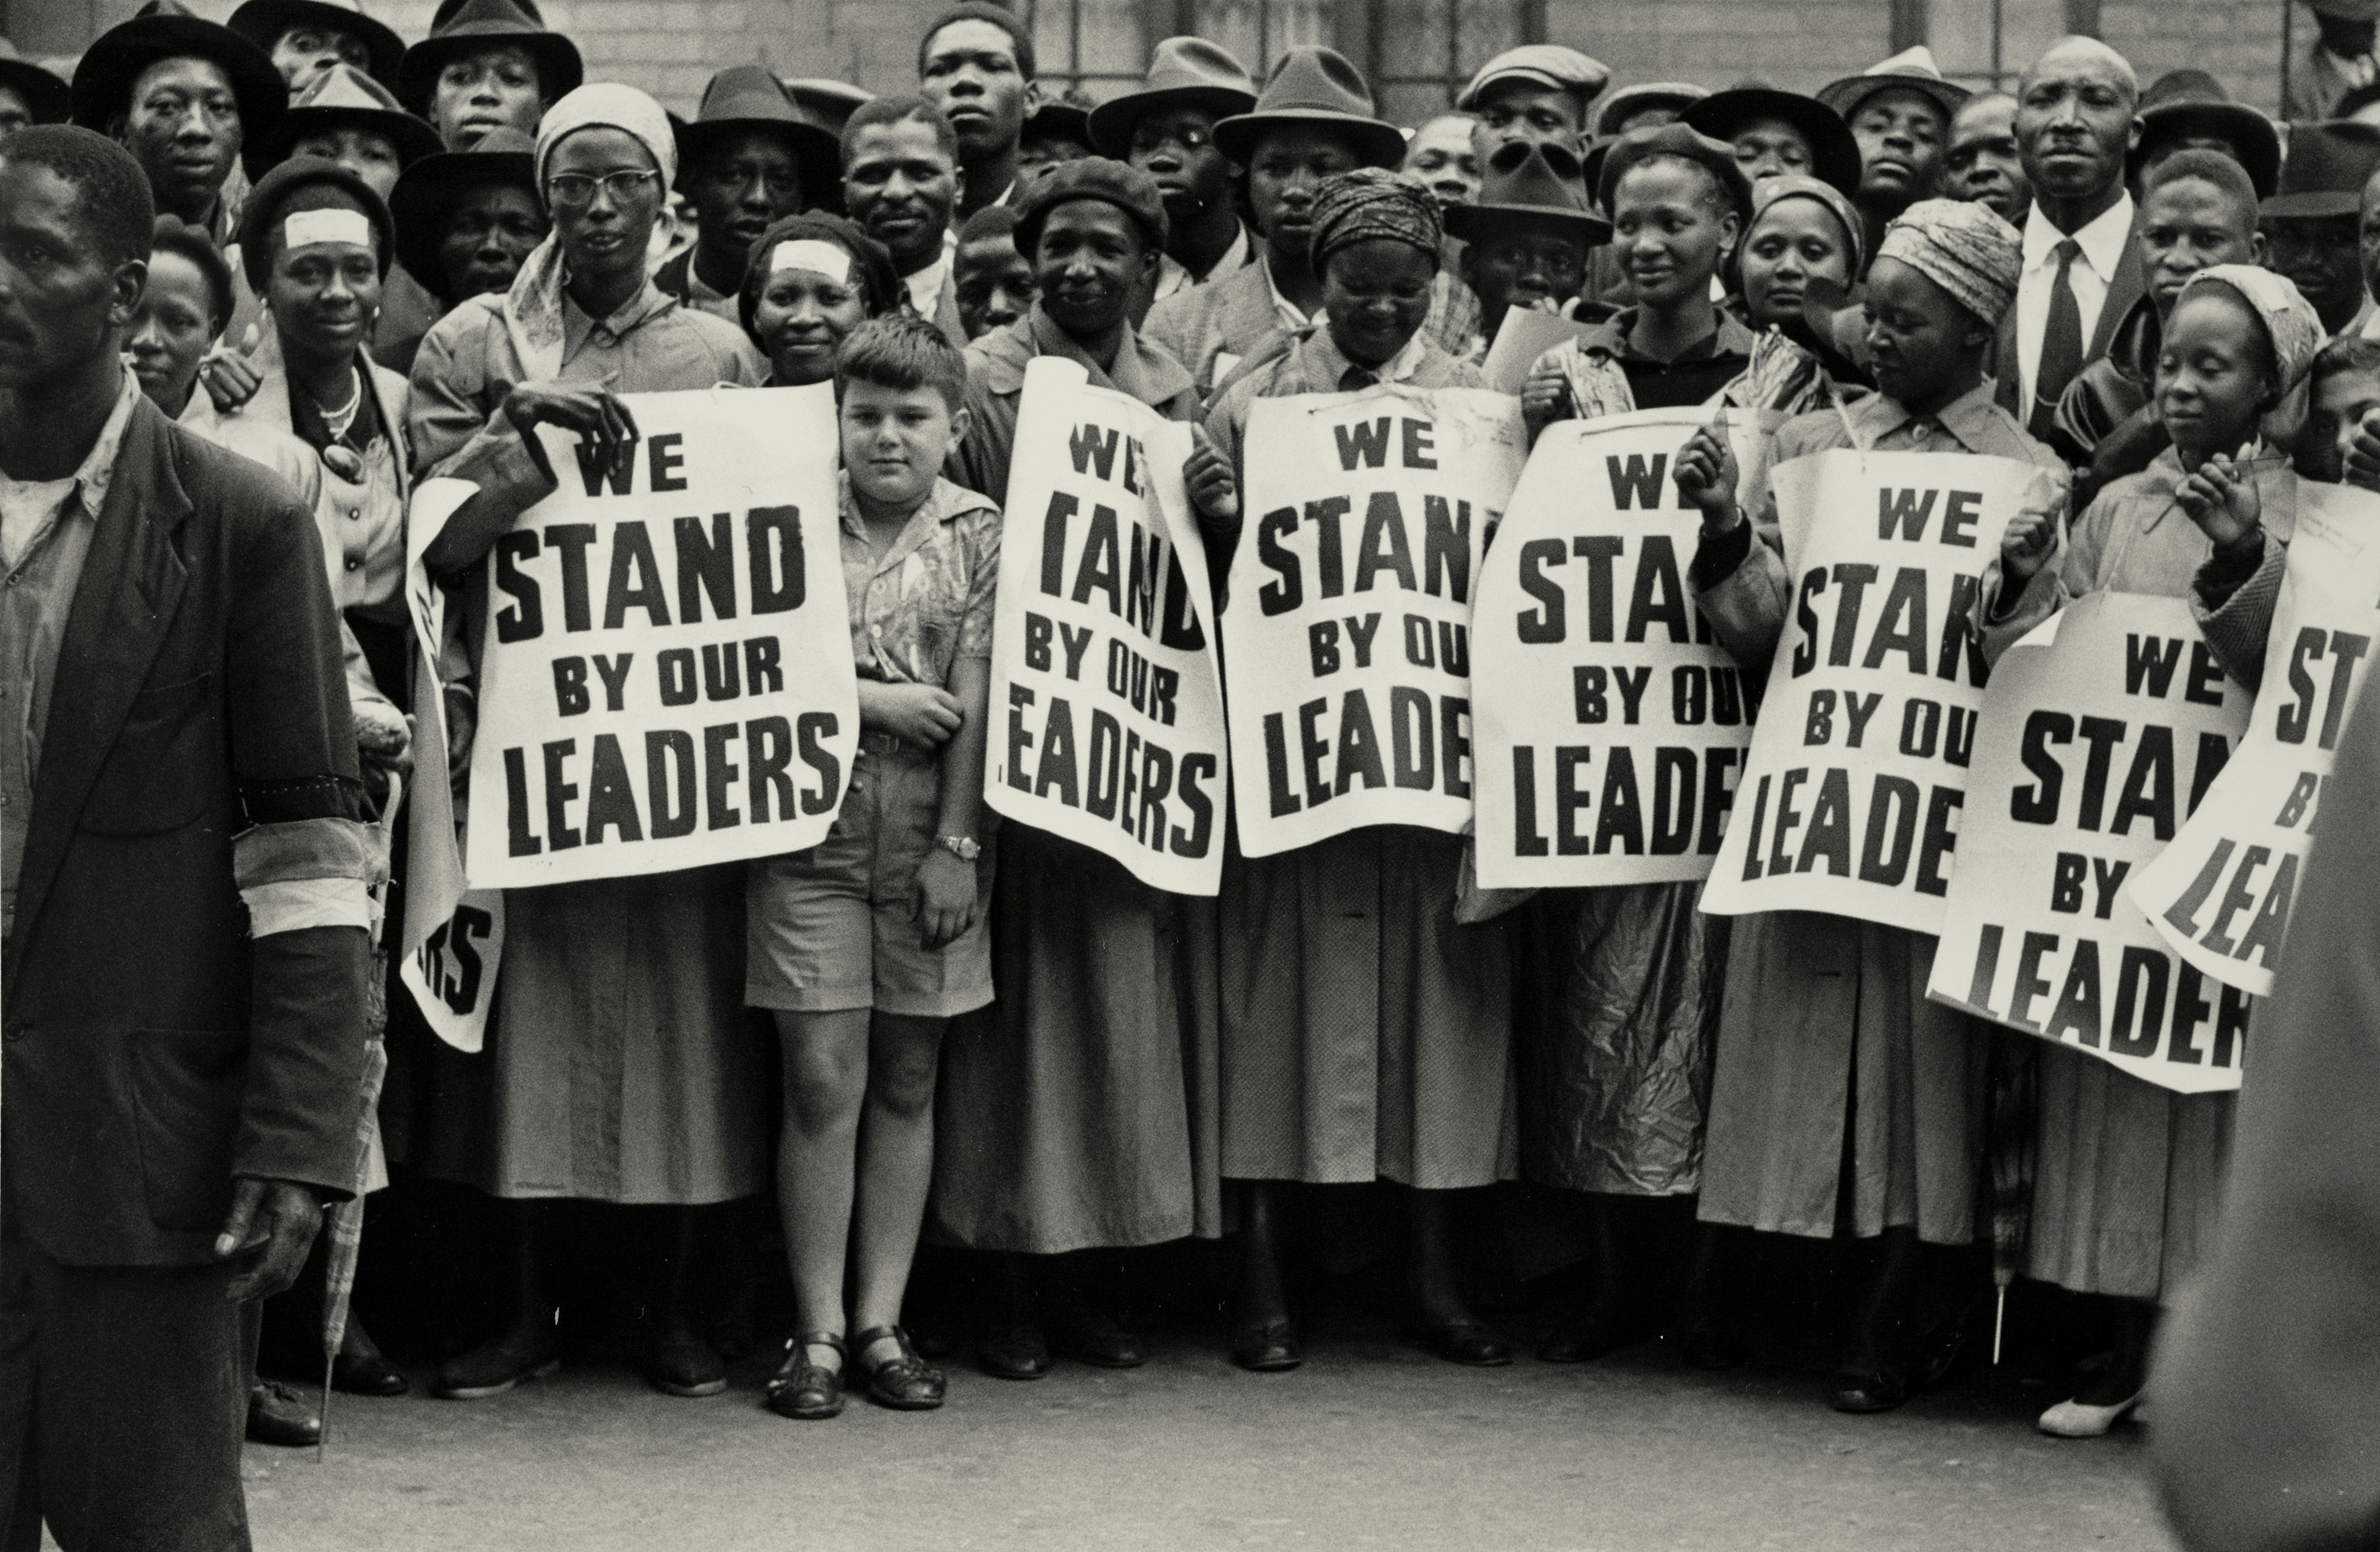 Near crowd. Апартеид в Южной Африке 1948-1994. Апартеид в ЮАР. Расовая сегрегация в ЮАР. Апартеид 1948 ЮАР.